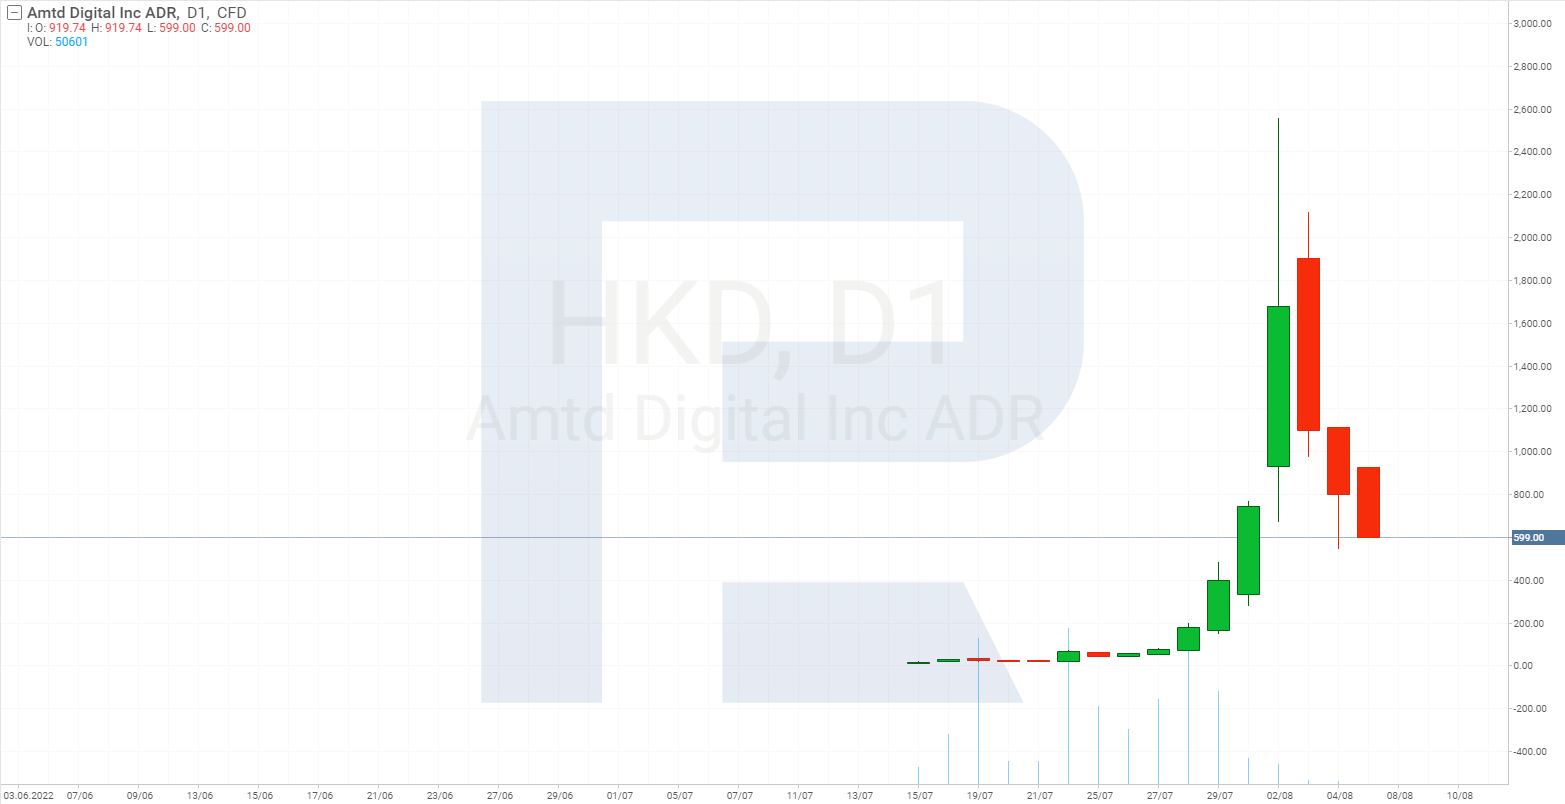 Share price chart of AMTD Digital